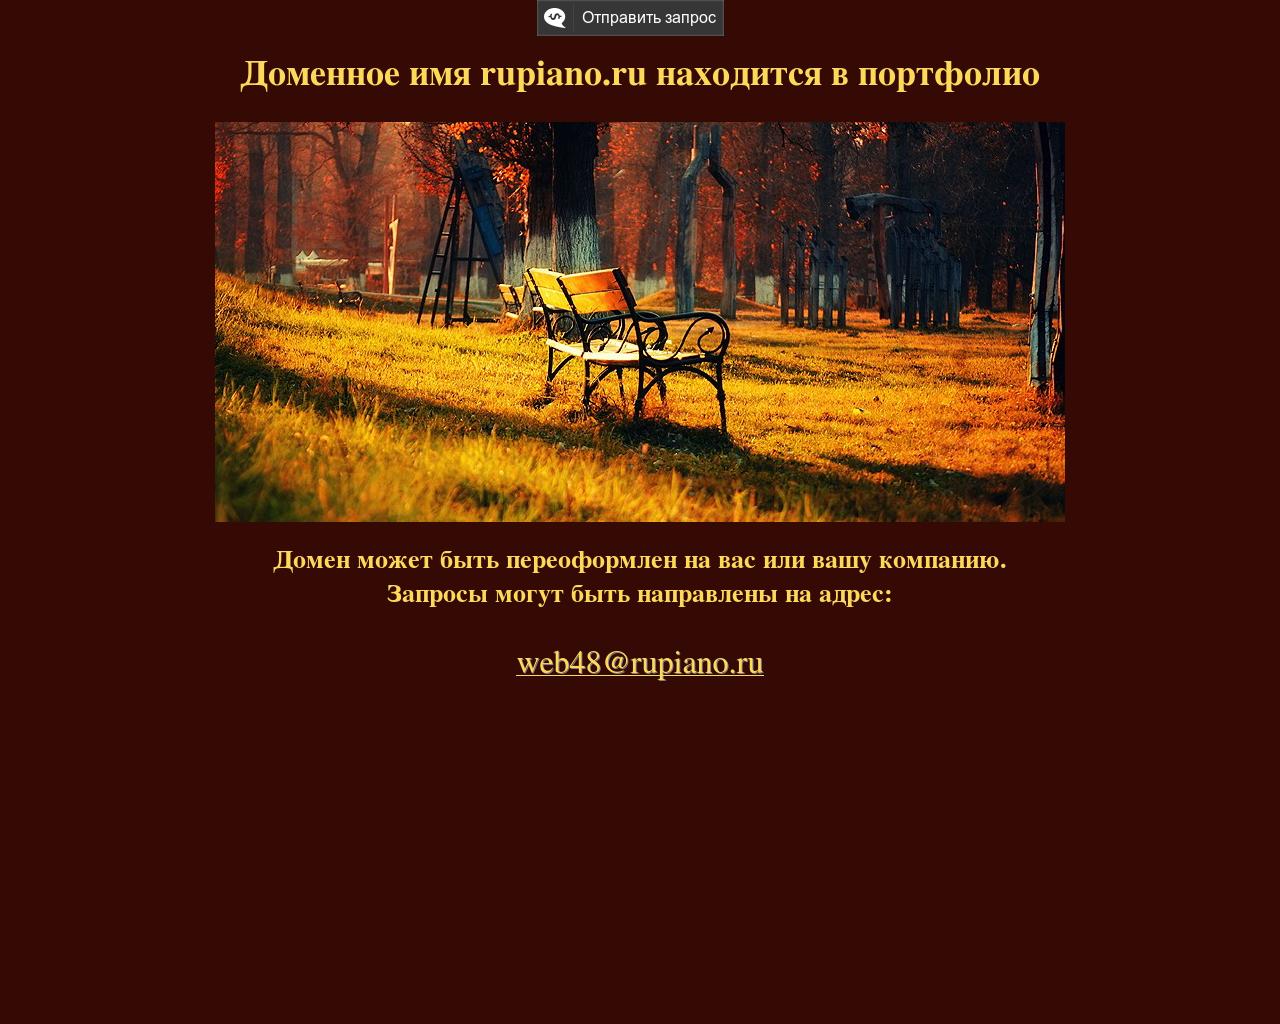 Изображение сайта rupiano.ru в разрешении 1280x1024